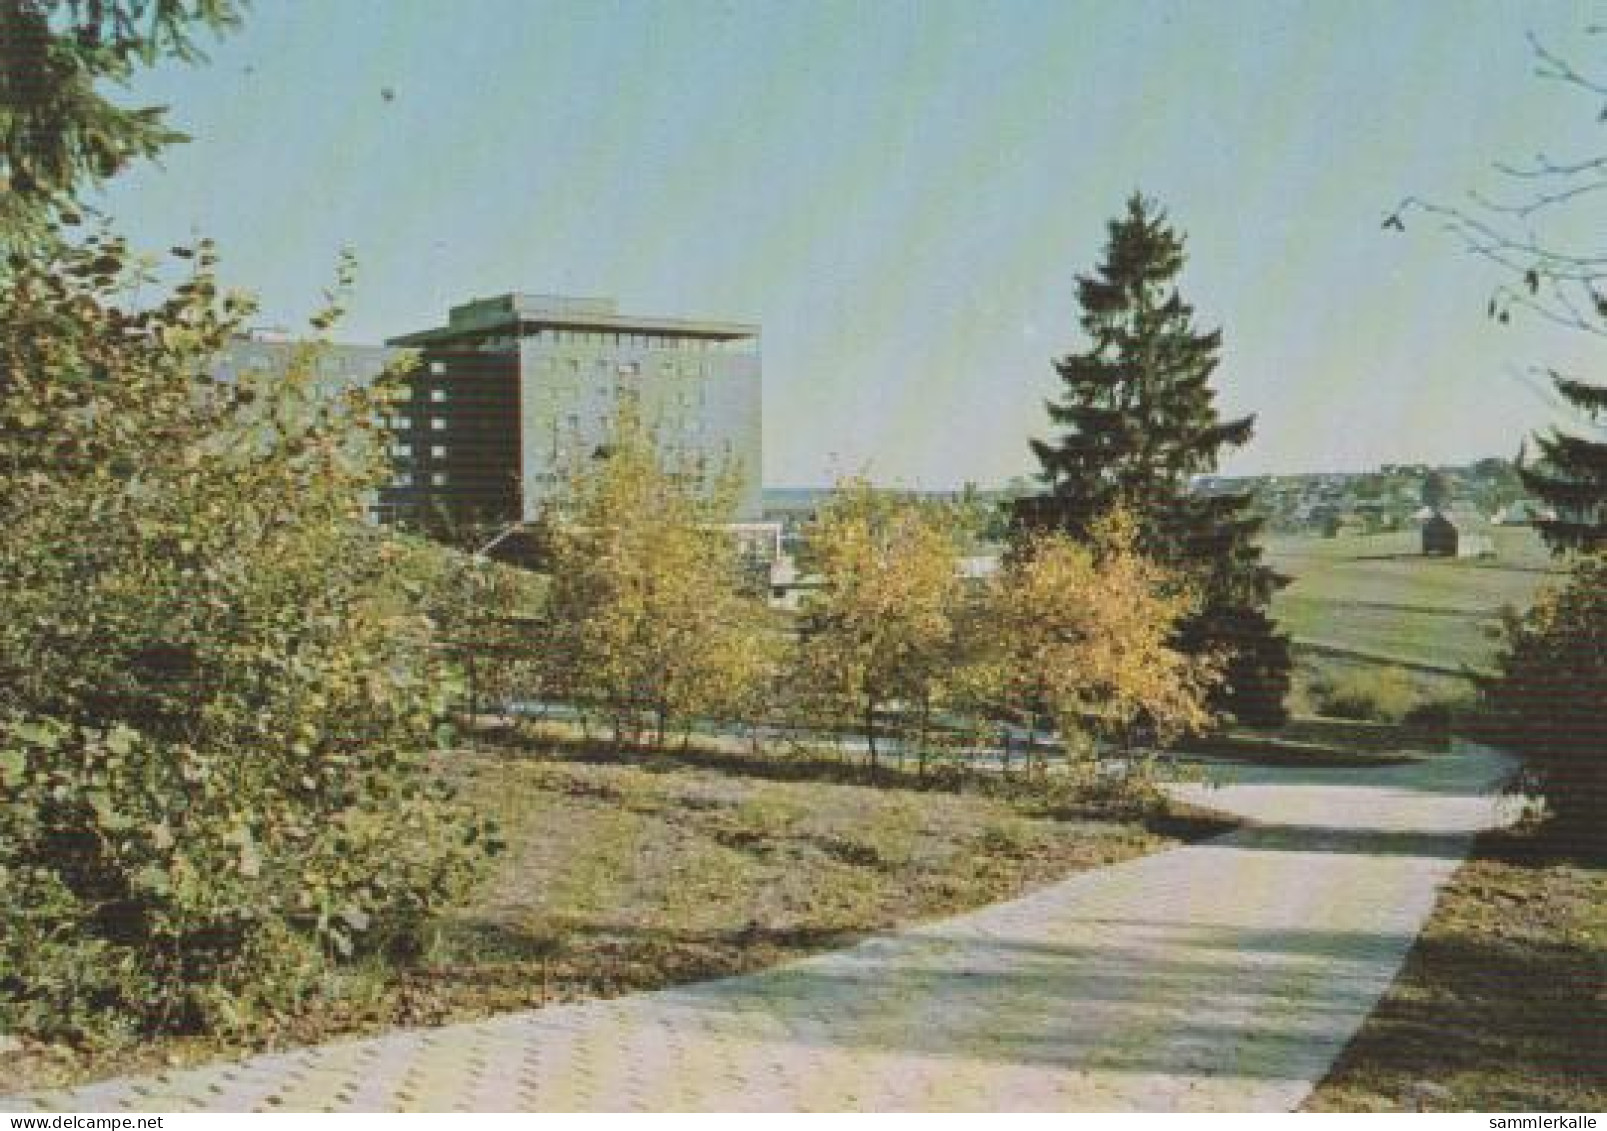 25217 - Nettersheim Marmagen - Eifelhöhen-Klinik - Ca. 1975 - Euskirchen